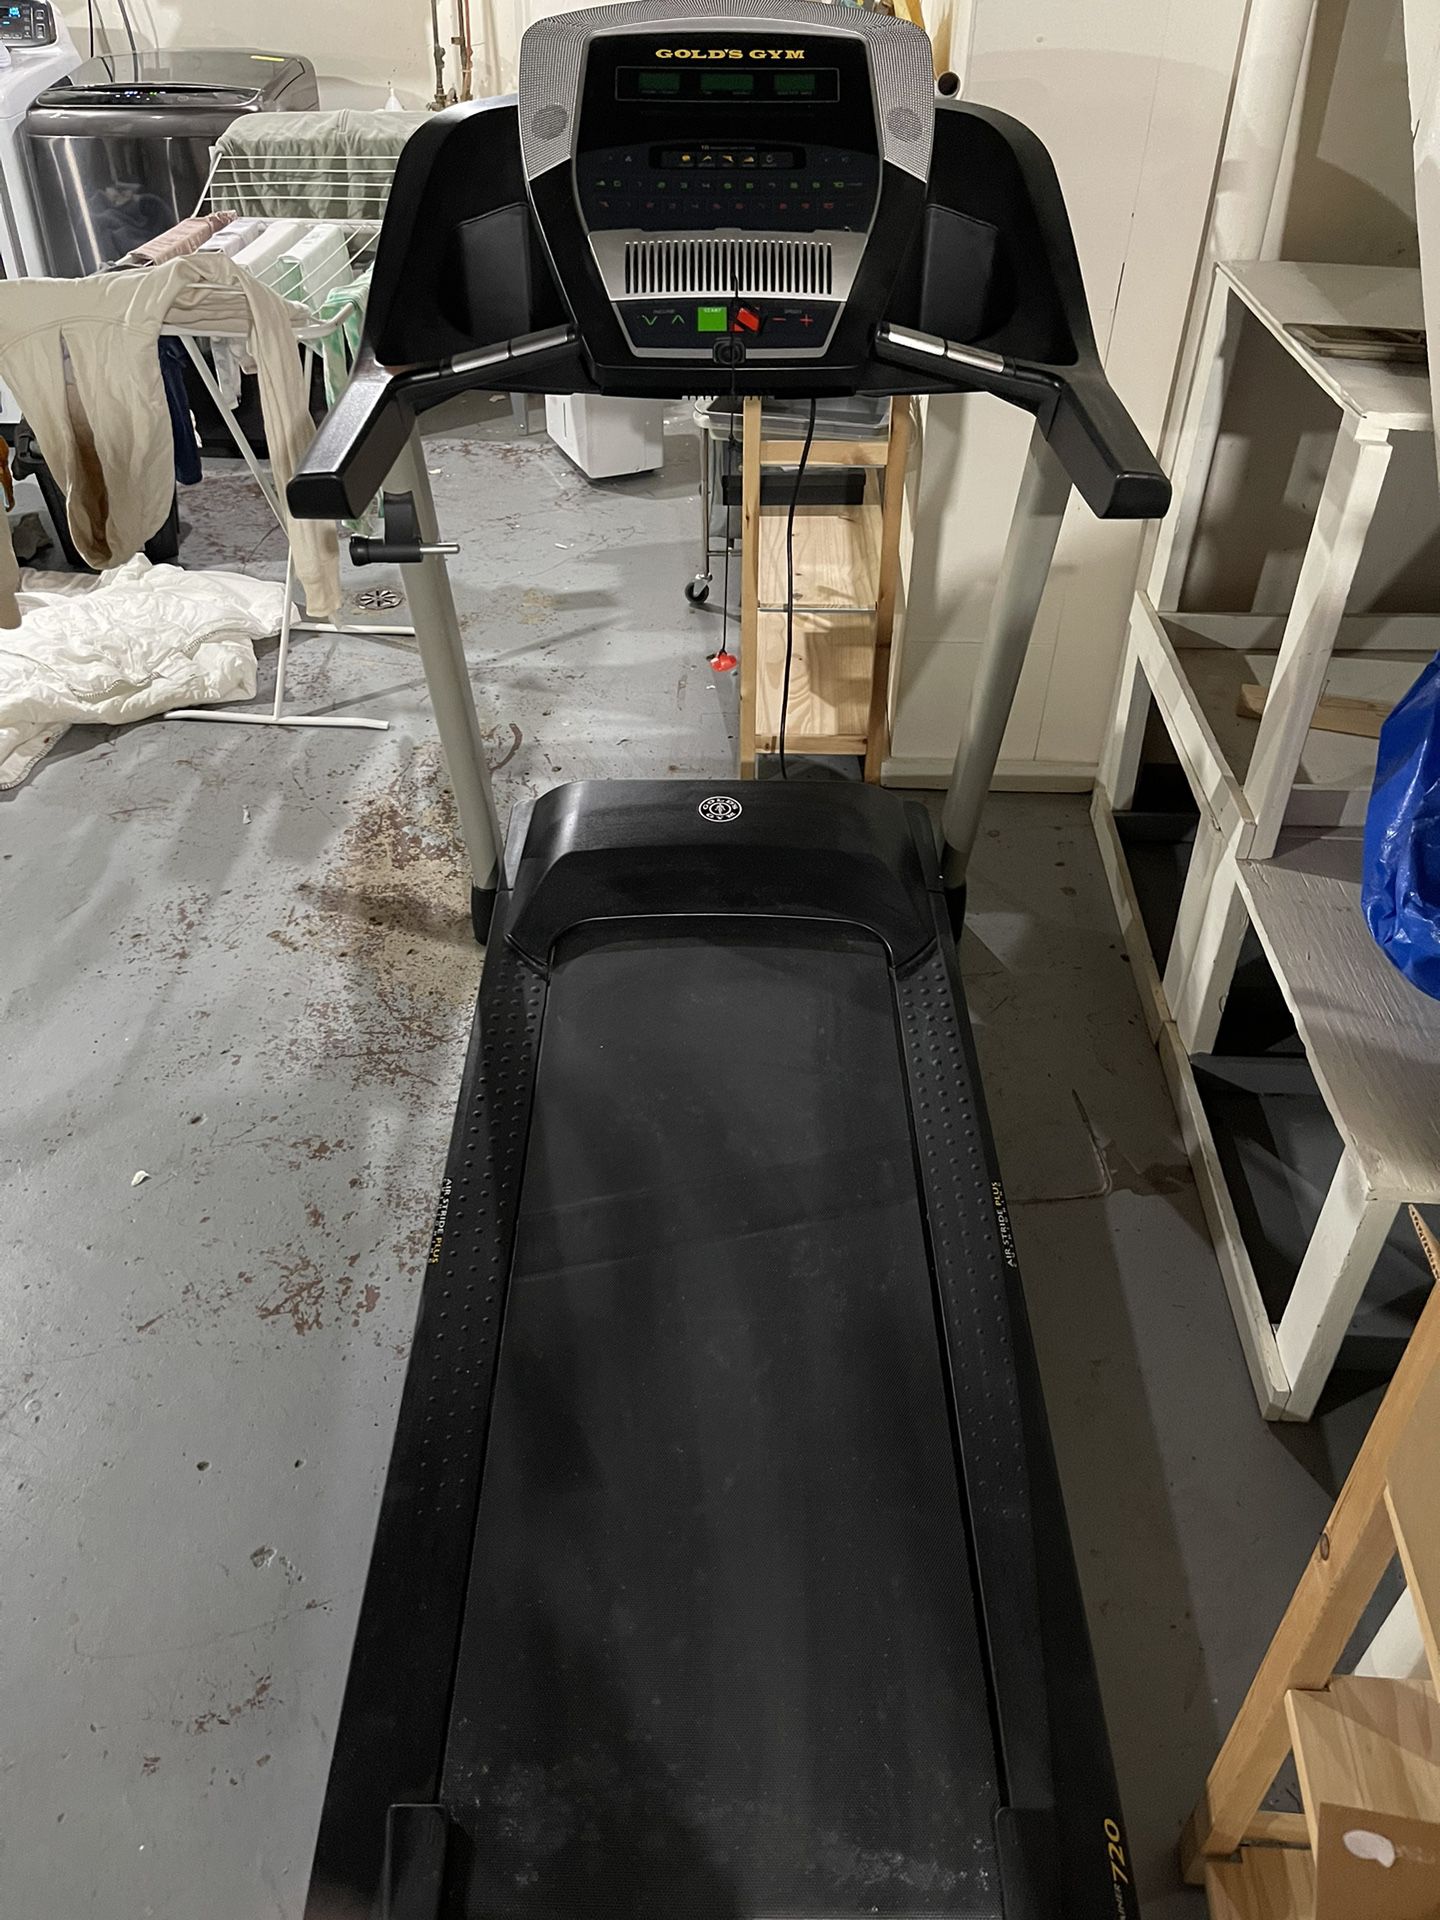 Gold’s Gym Treadmill